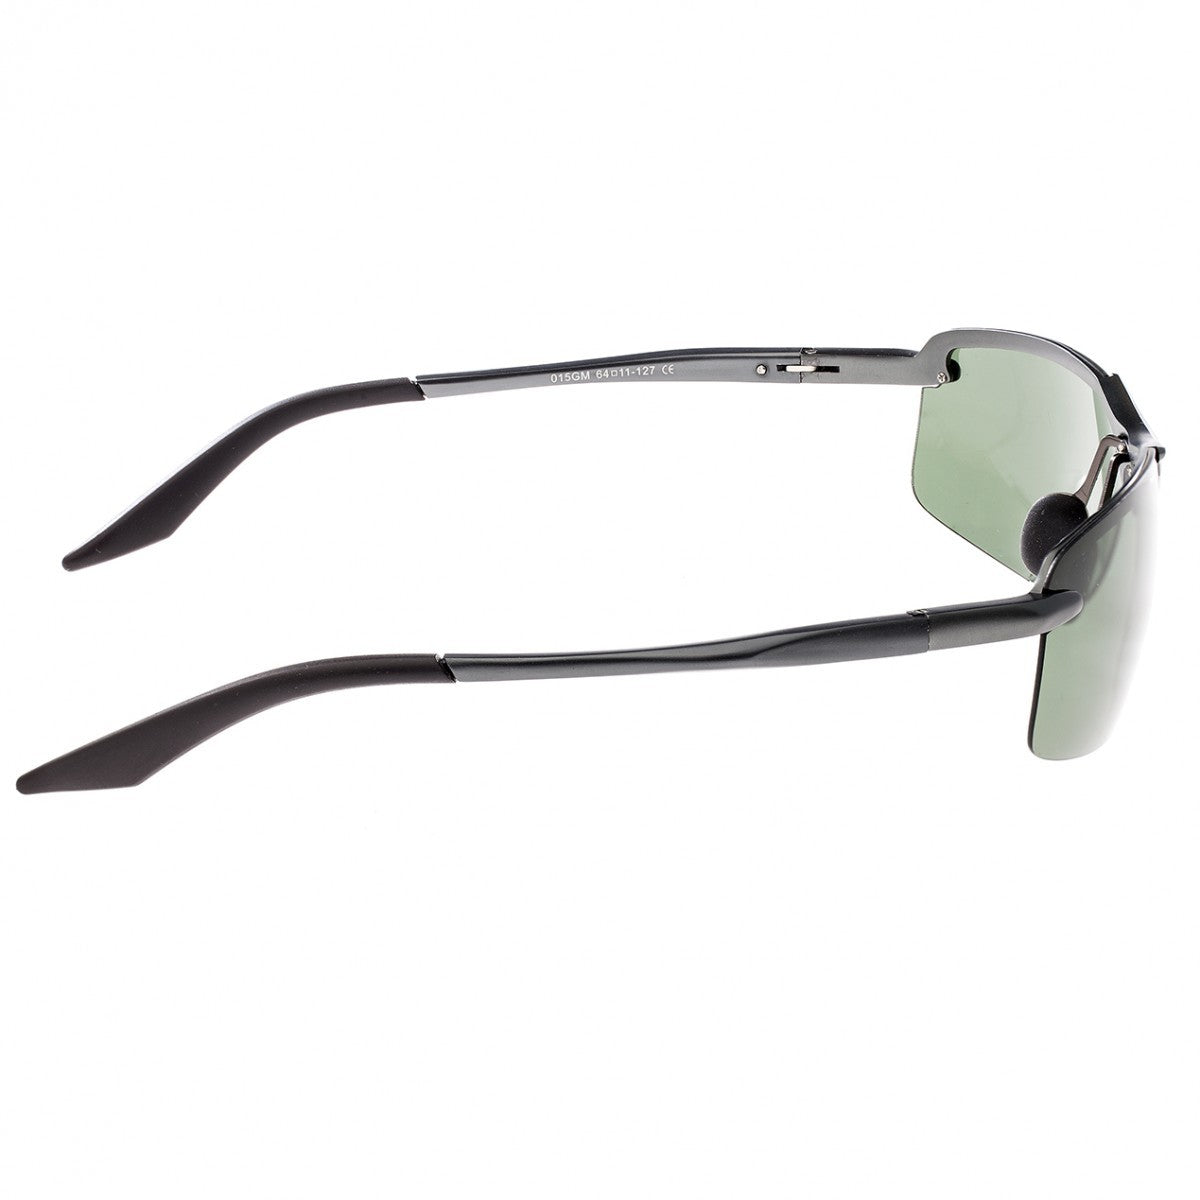 Breed Lynx Aluminium Polarized Sunglasses - Gunmetal/Black - BSG015GM